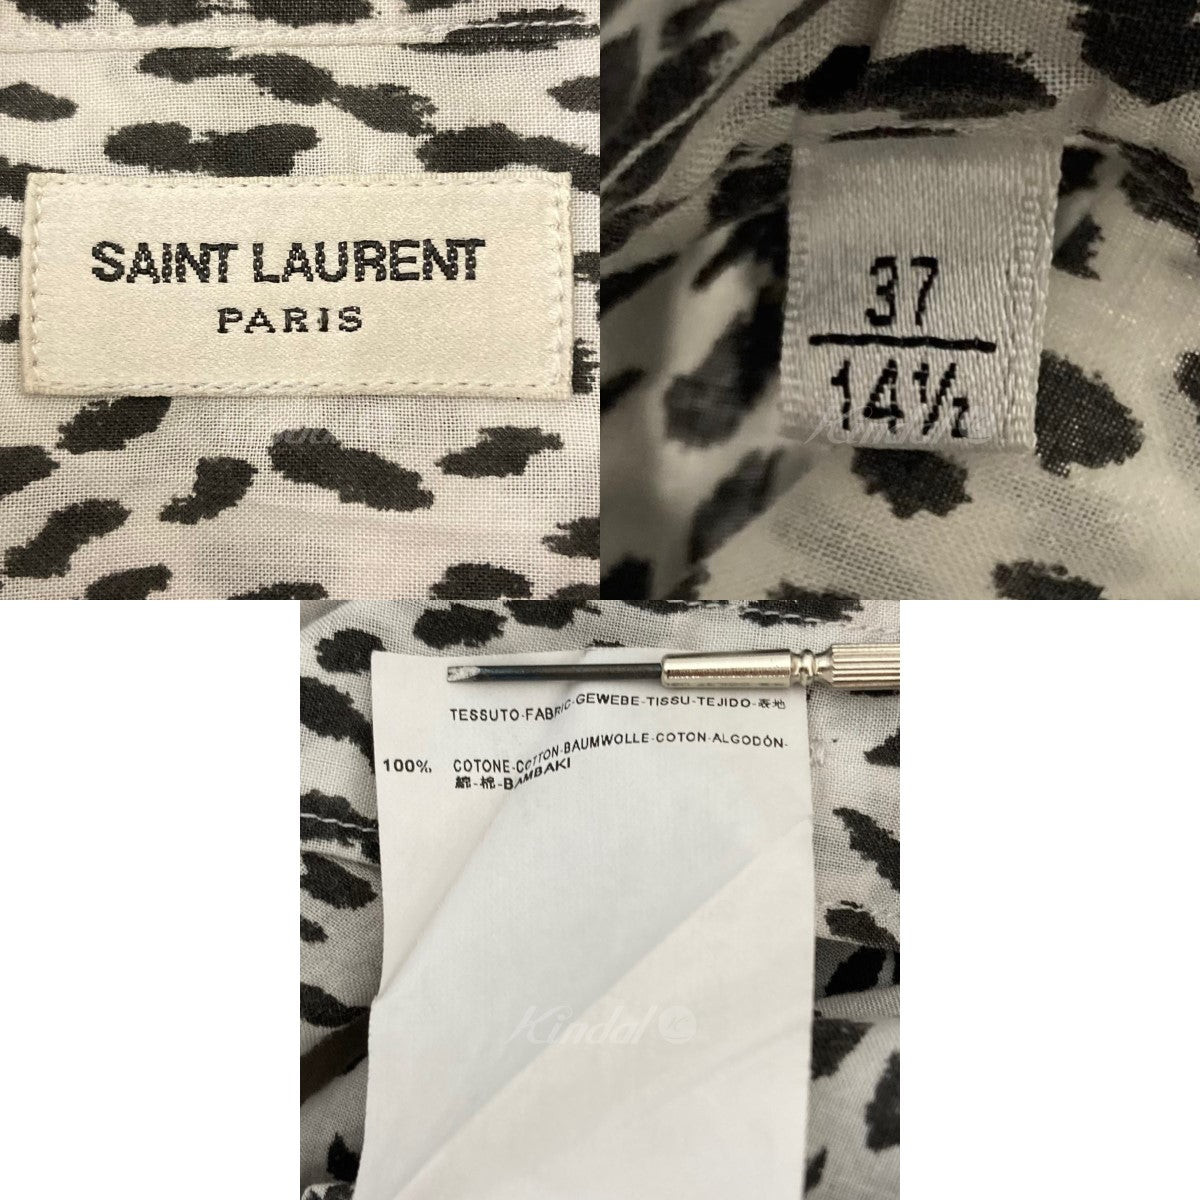 SAINT LAURENT PARIS(サンローランパリ) ベイビーキャットシャツ 